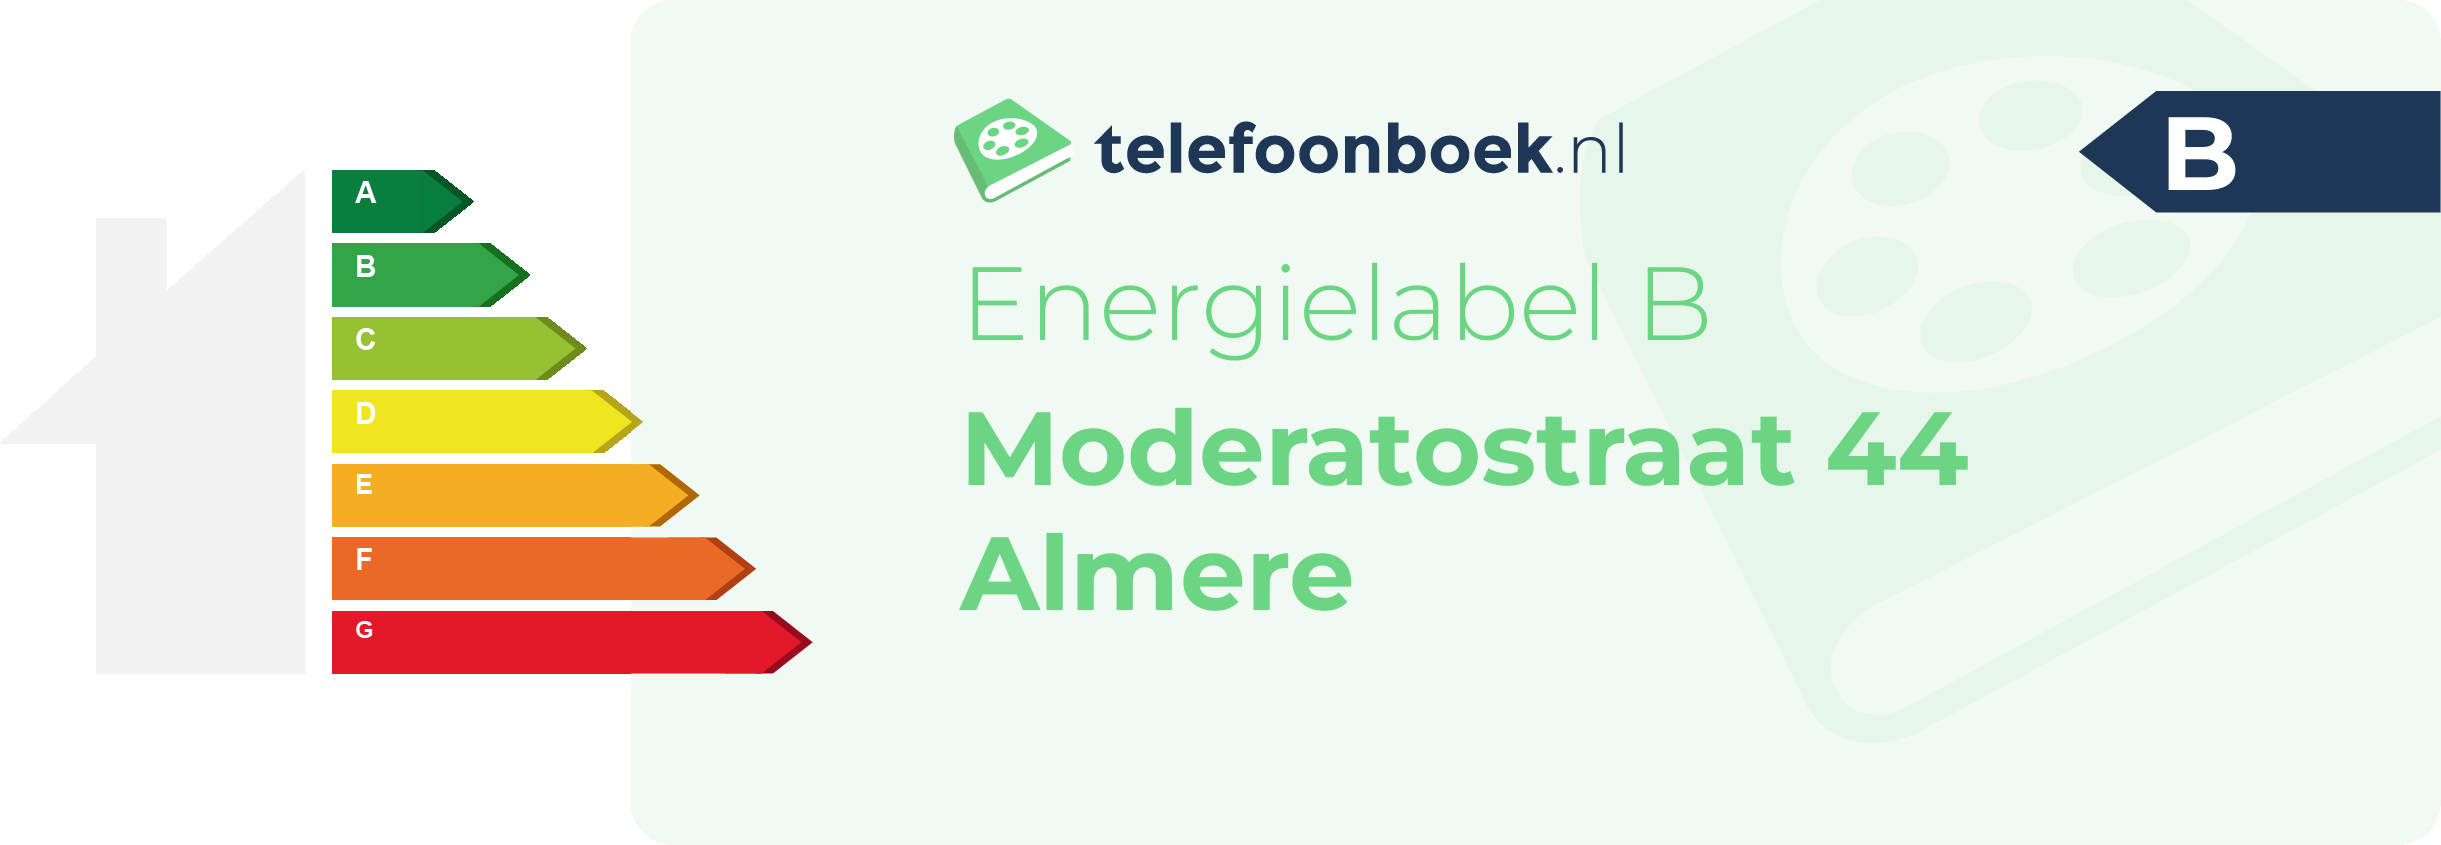 Energielabel Moderatostraat 44 Almere